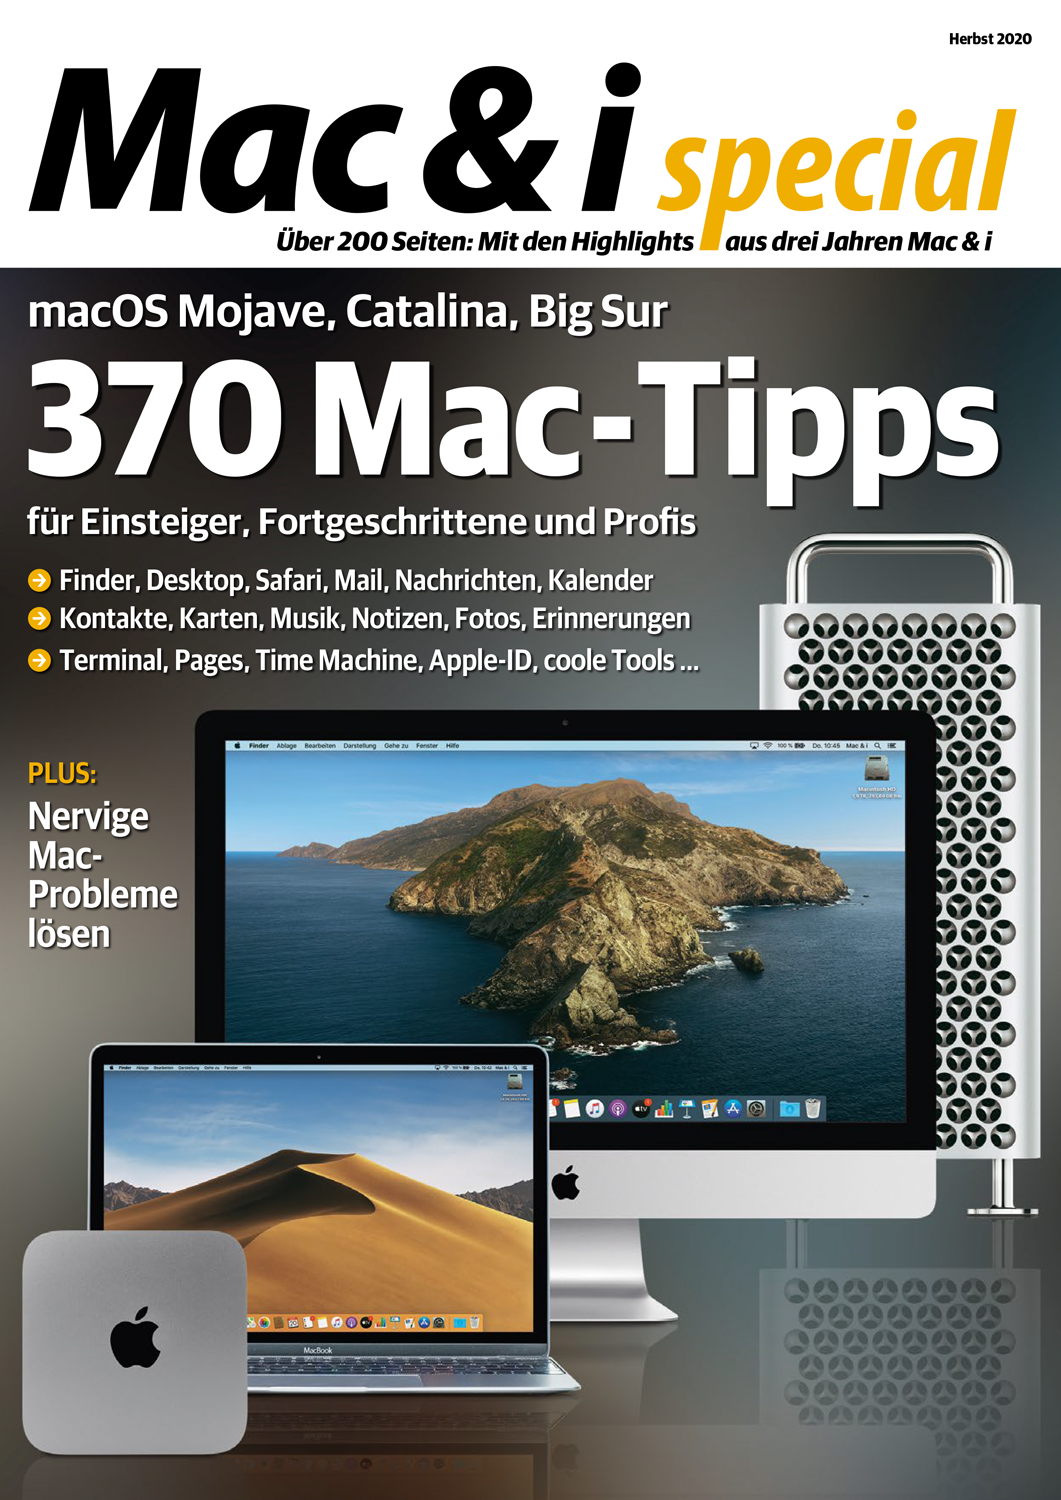 Mac & i special 370 Mac-Tipps 2020